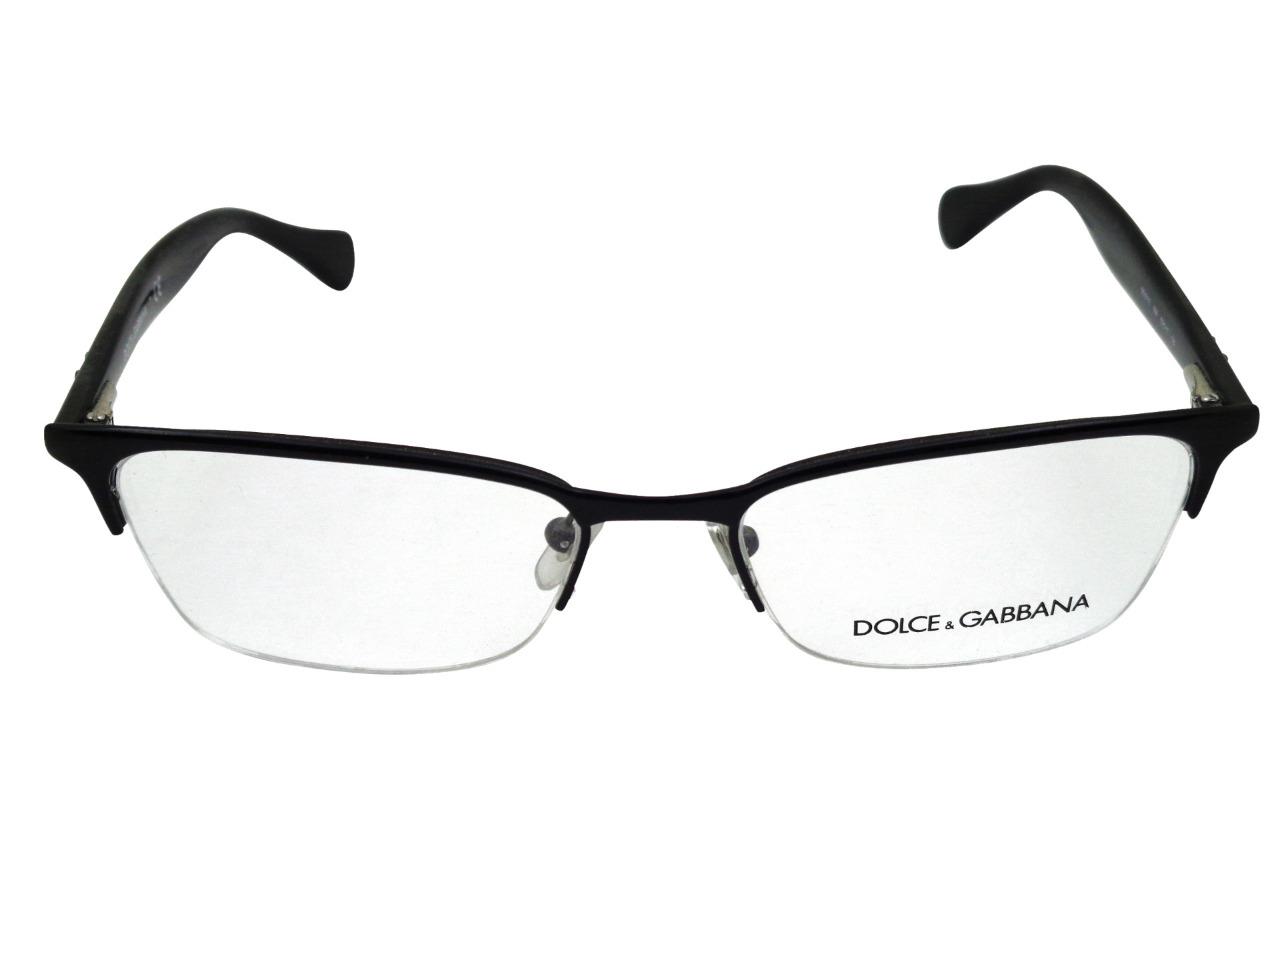 d&g spectacle frames